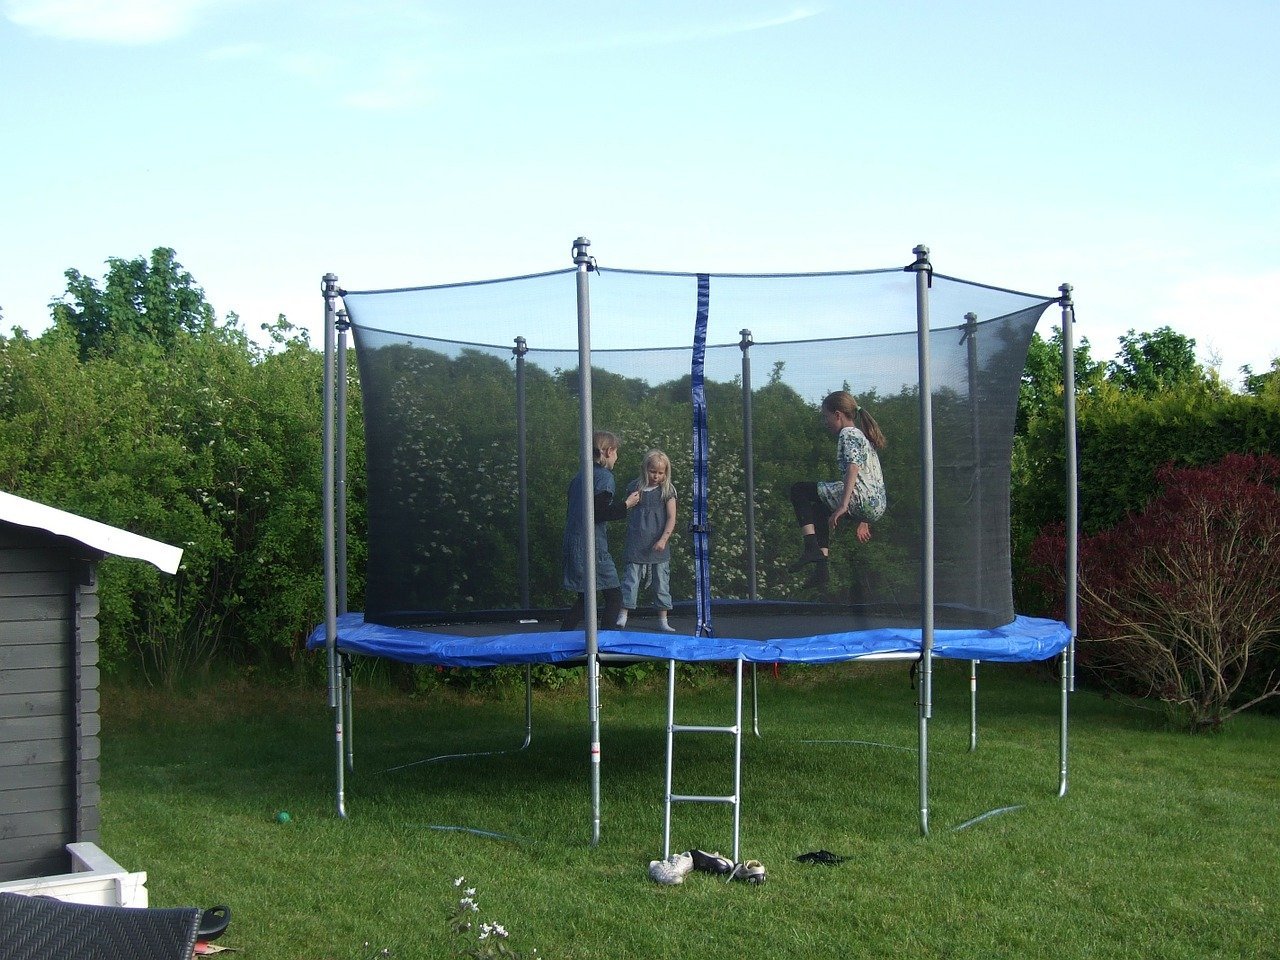 Children jumping on a trampoline